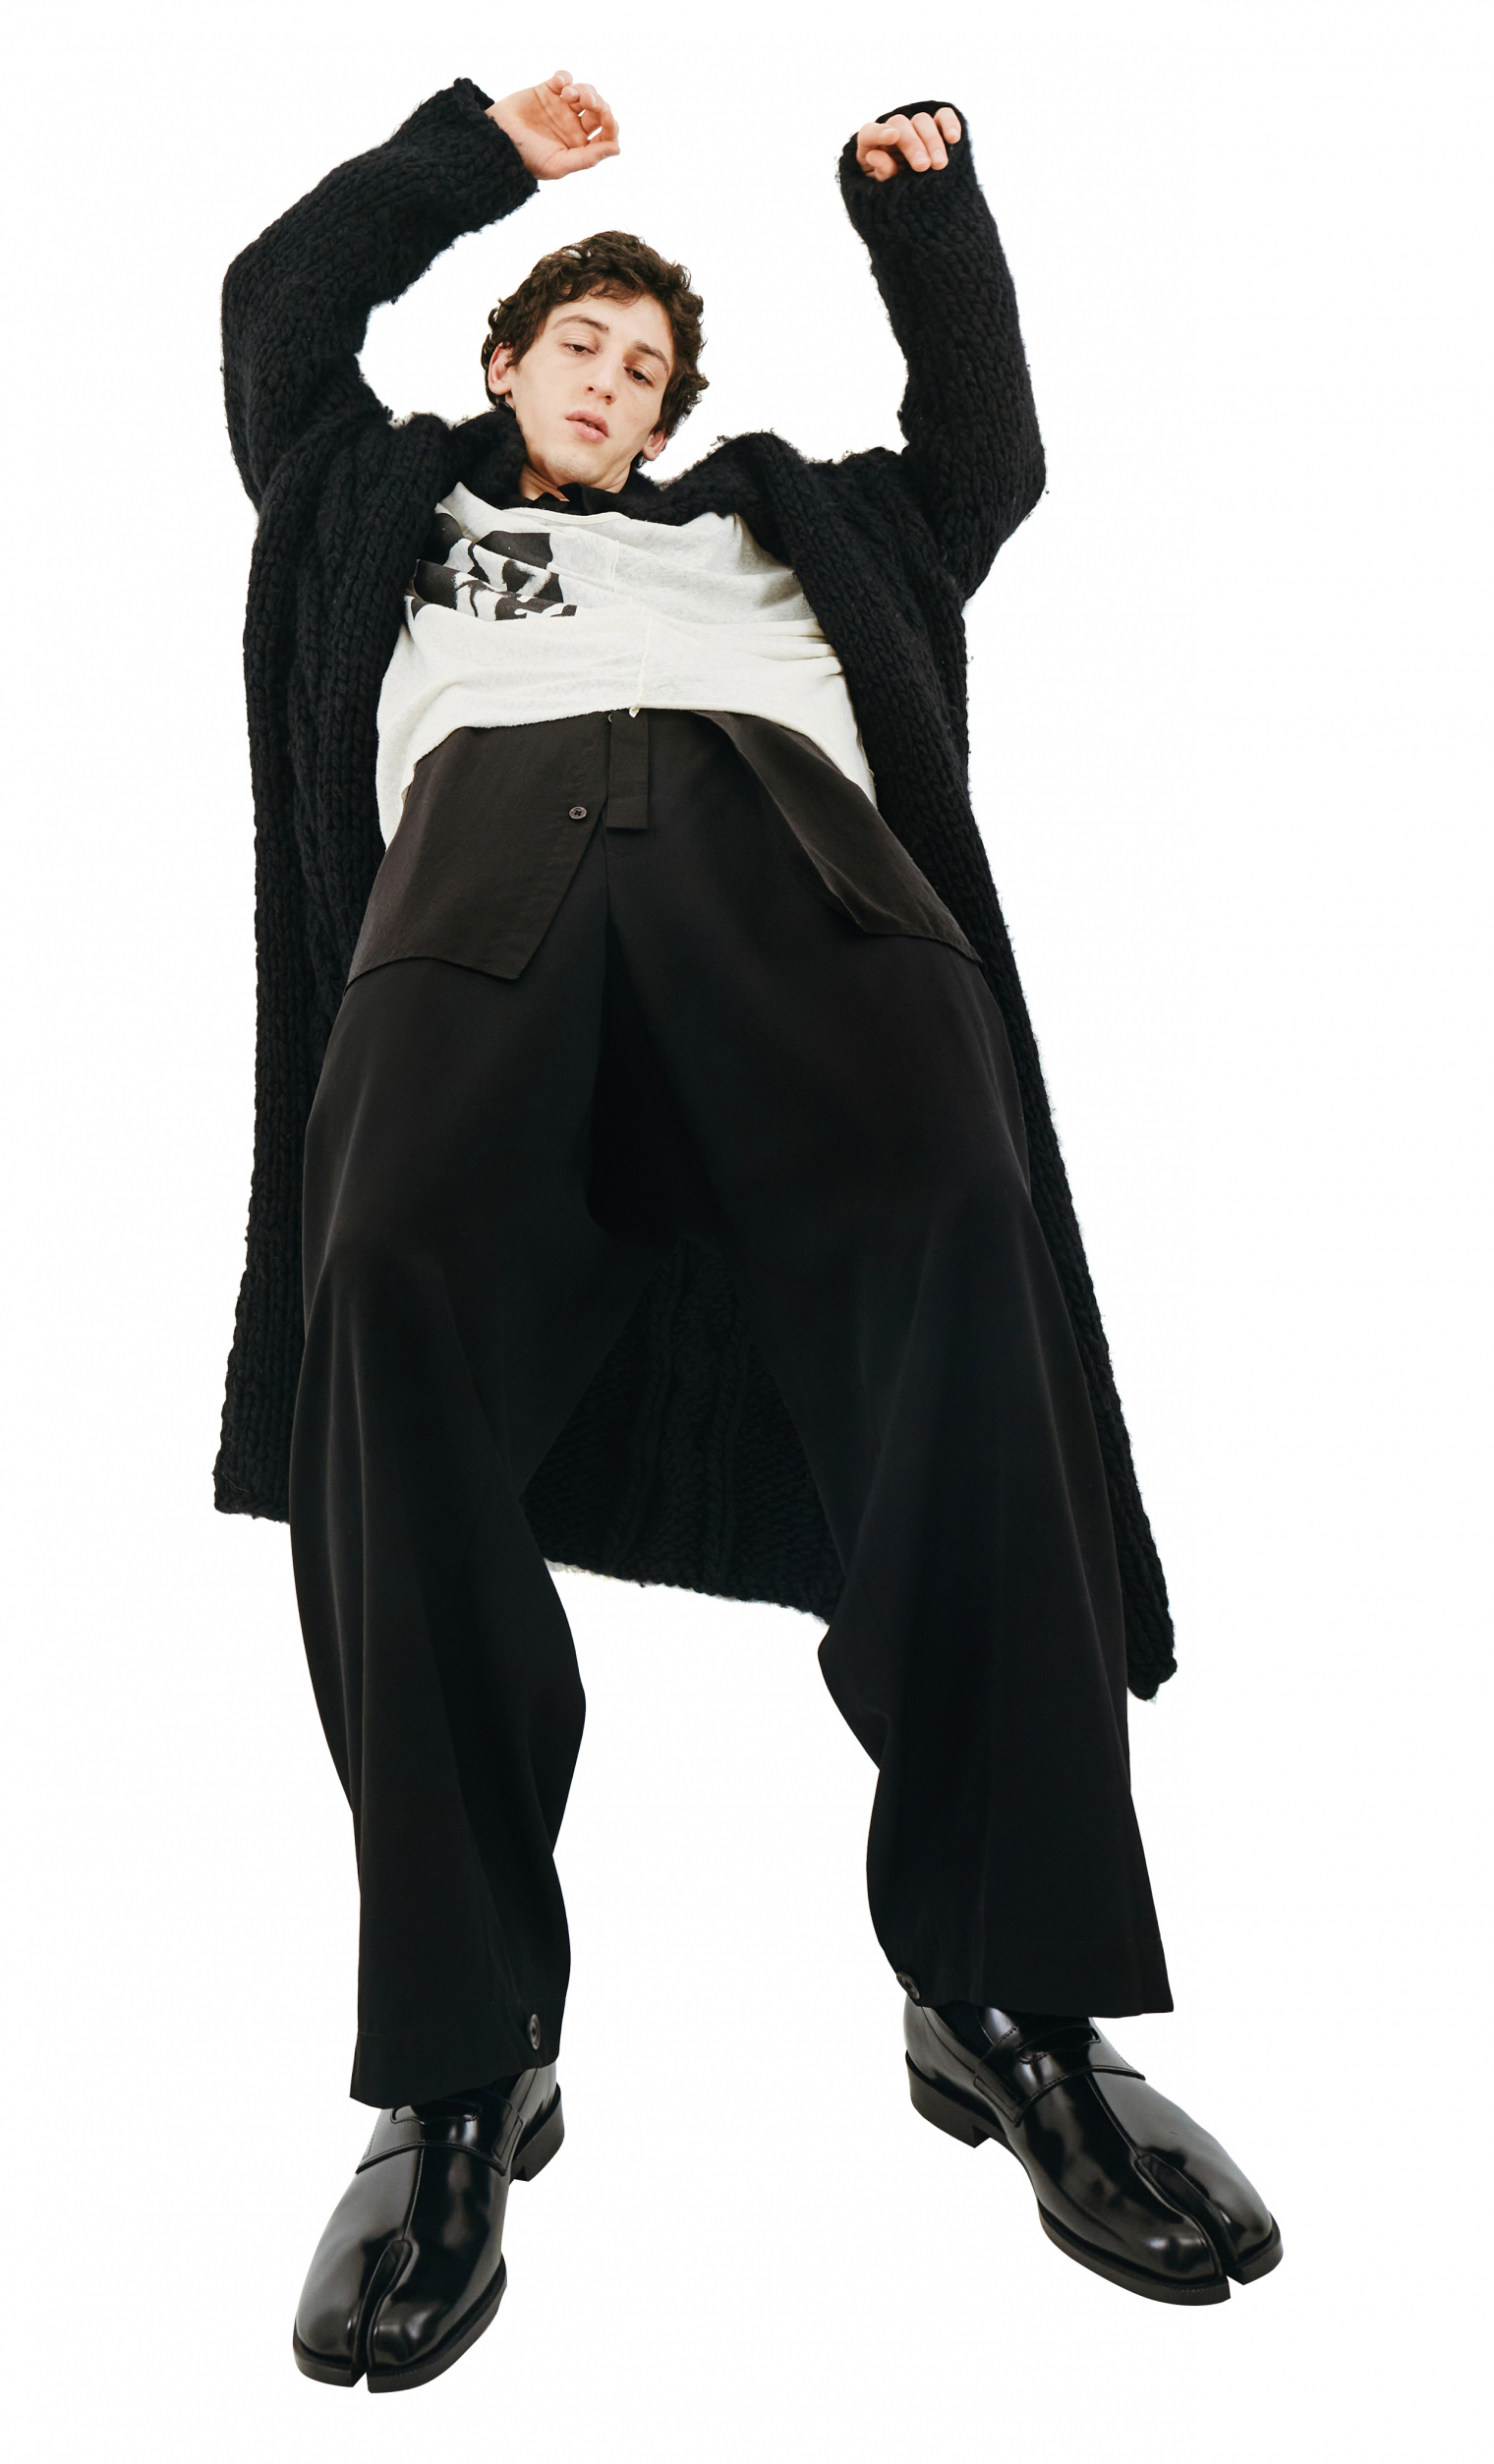 Yohji Yamamoto Шерстяное пальто крупной вязки